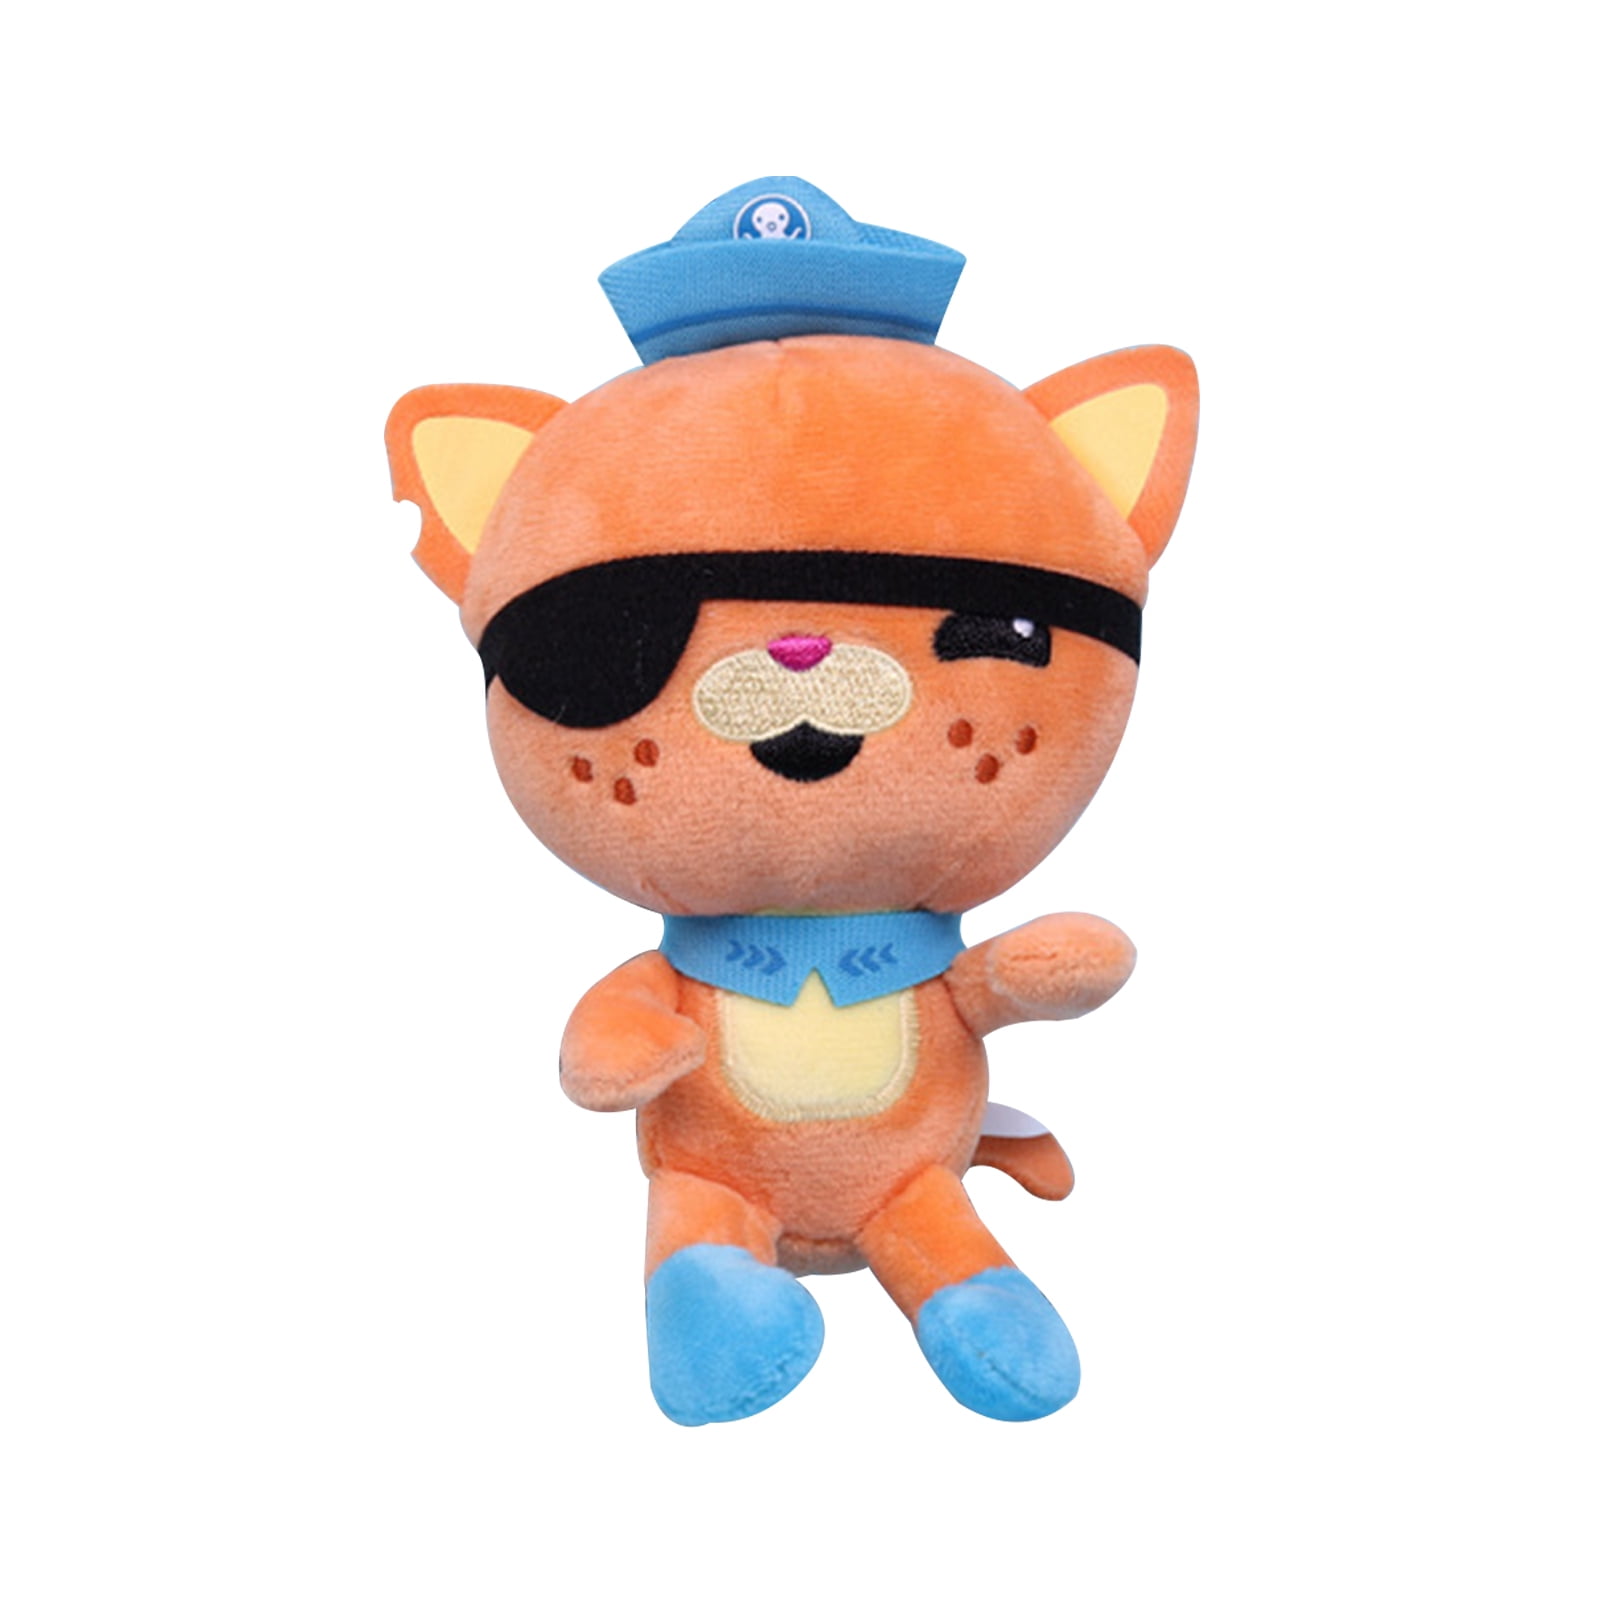 The Octonauts Dashi Character 10" Stuffed Animal Cartoon Game Plush Toy Teddy 